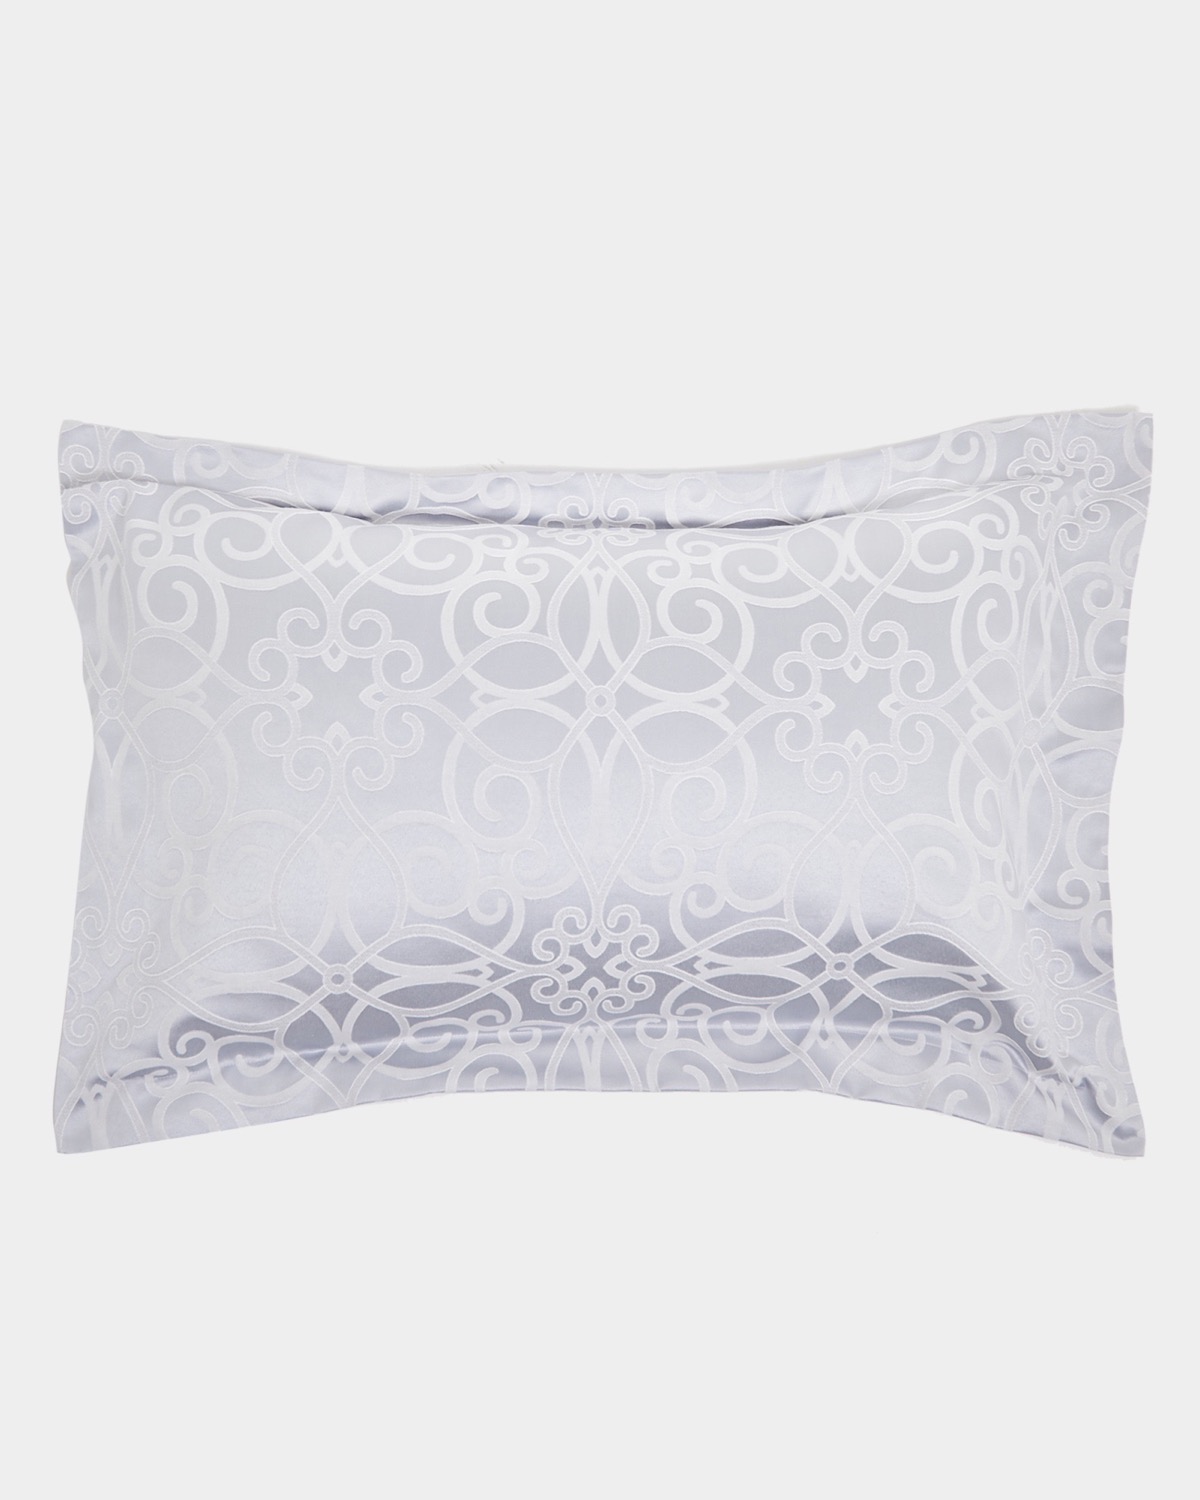 Filigree Jacquard Oxford Pillowcase